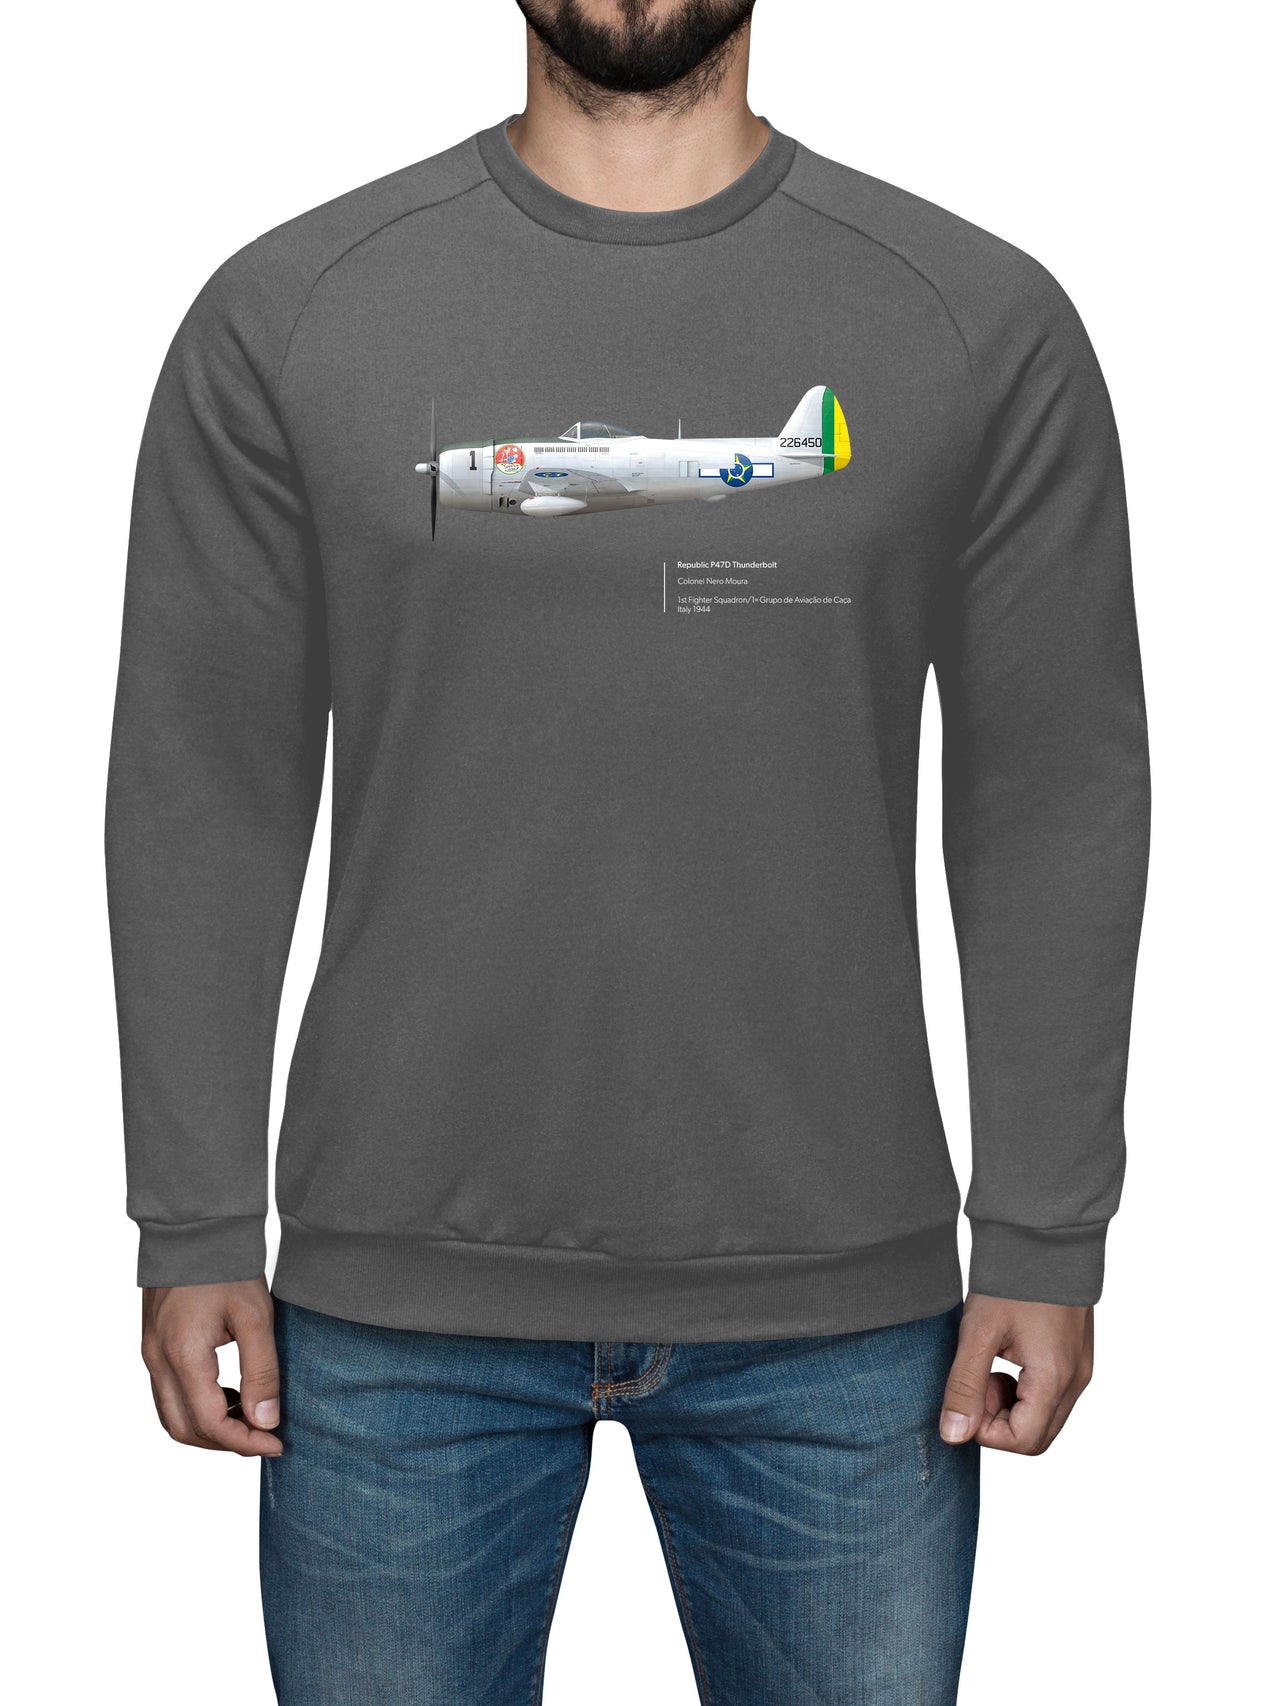 Thunderbolt 493FS - Sweat Shirt